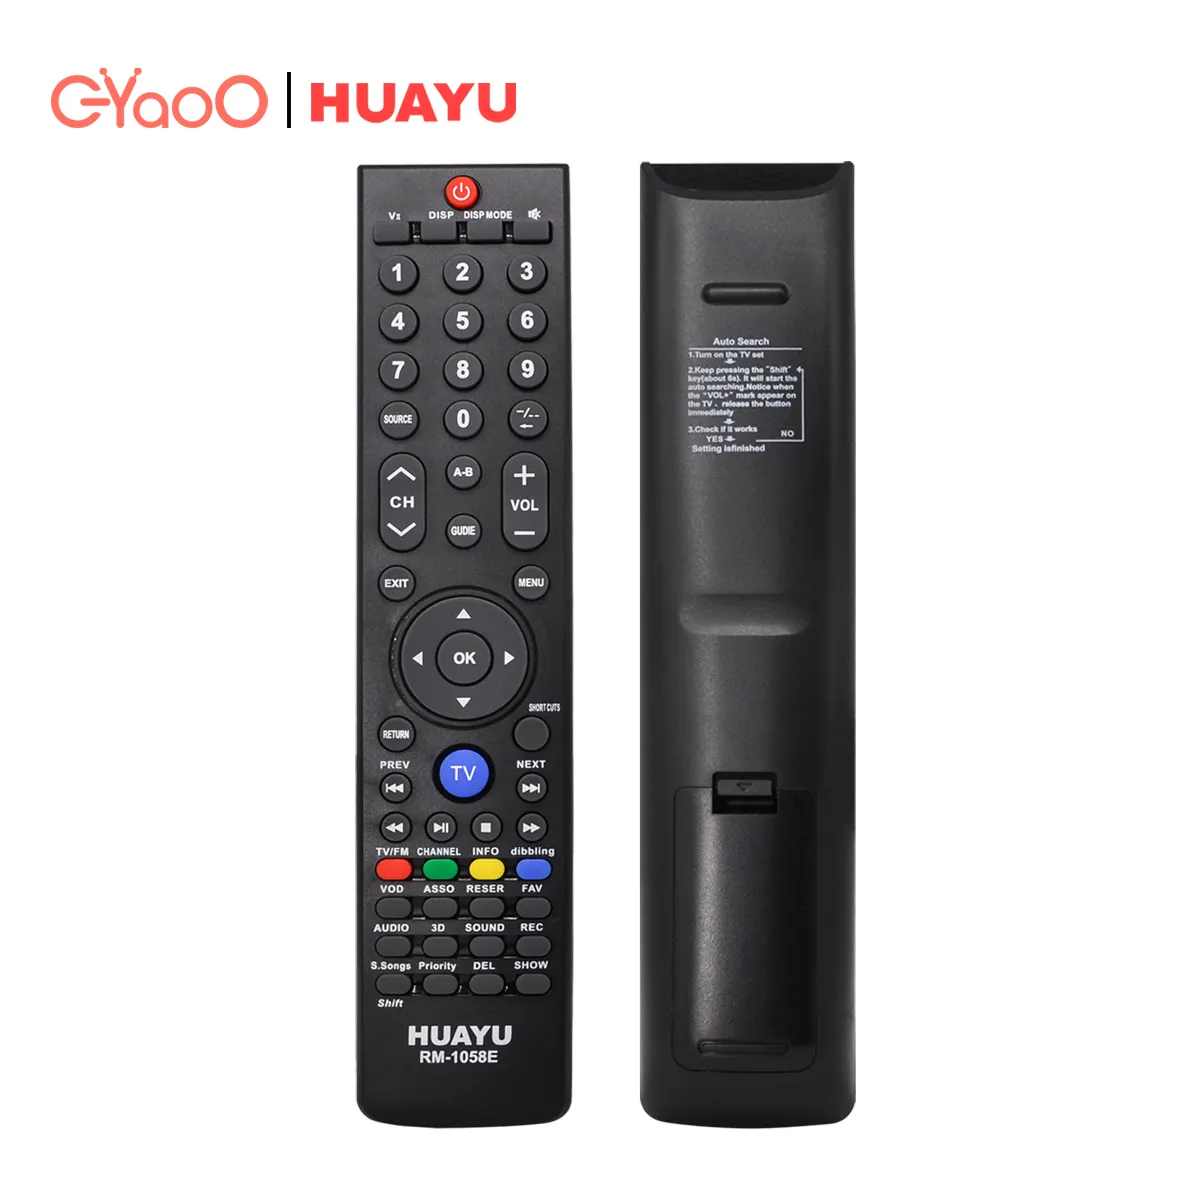 HUAYU RM-1058E Fungsi 3D Skyworth Smart LED LCD Remote Kontrol TV Universal